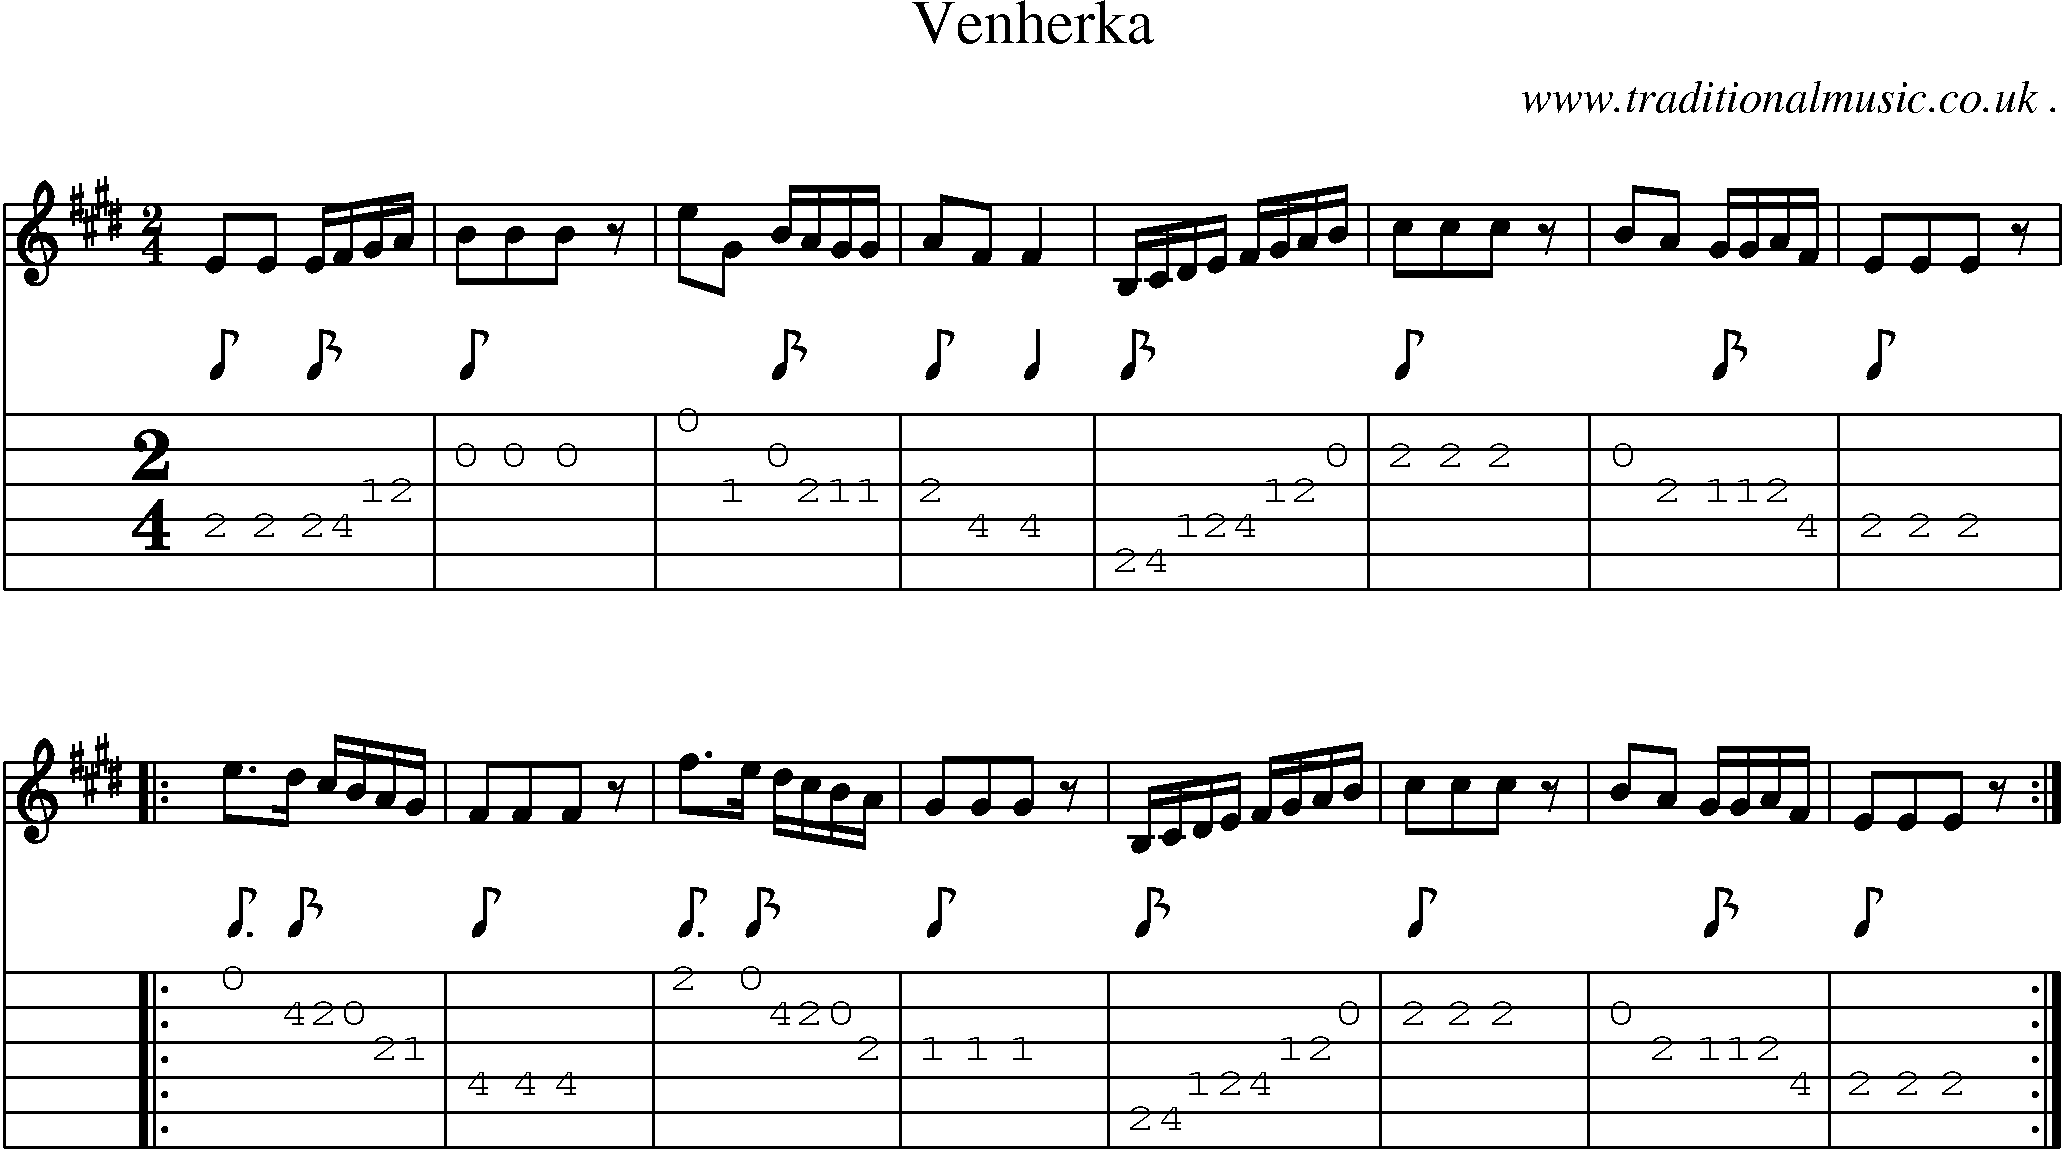 Sheet-Music and Guitar Tabs for Venherka